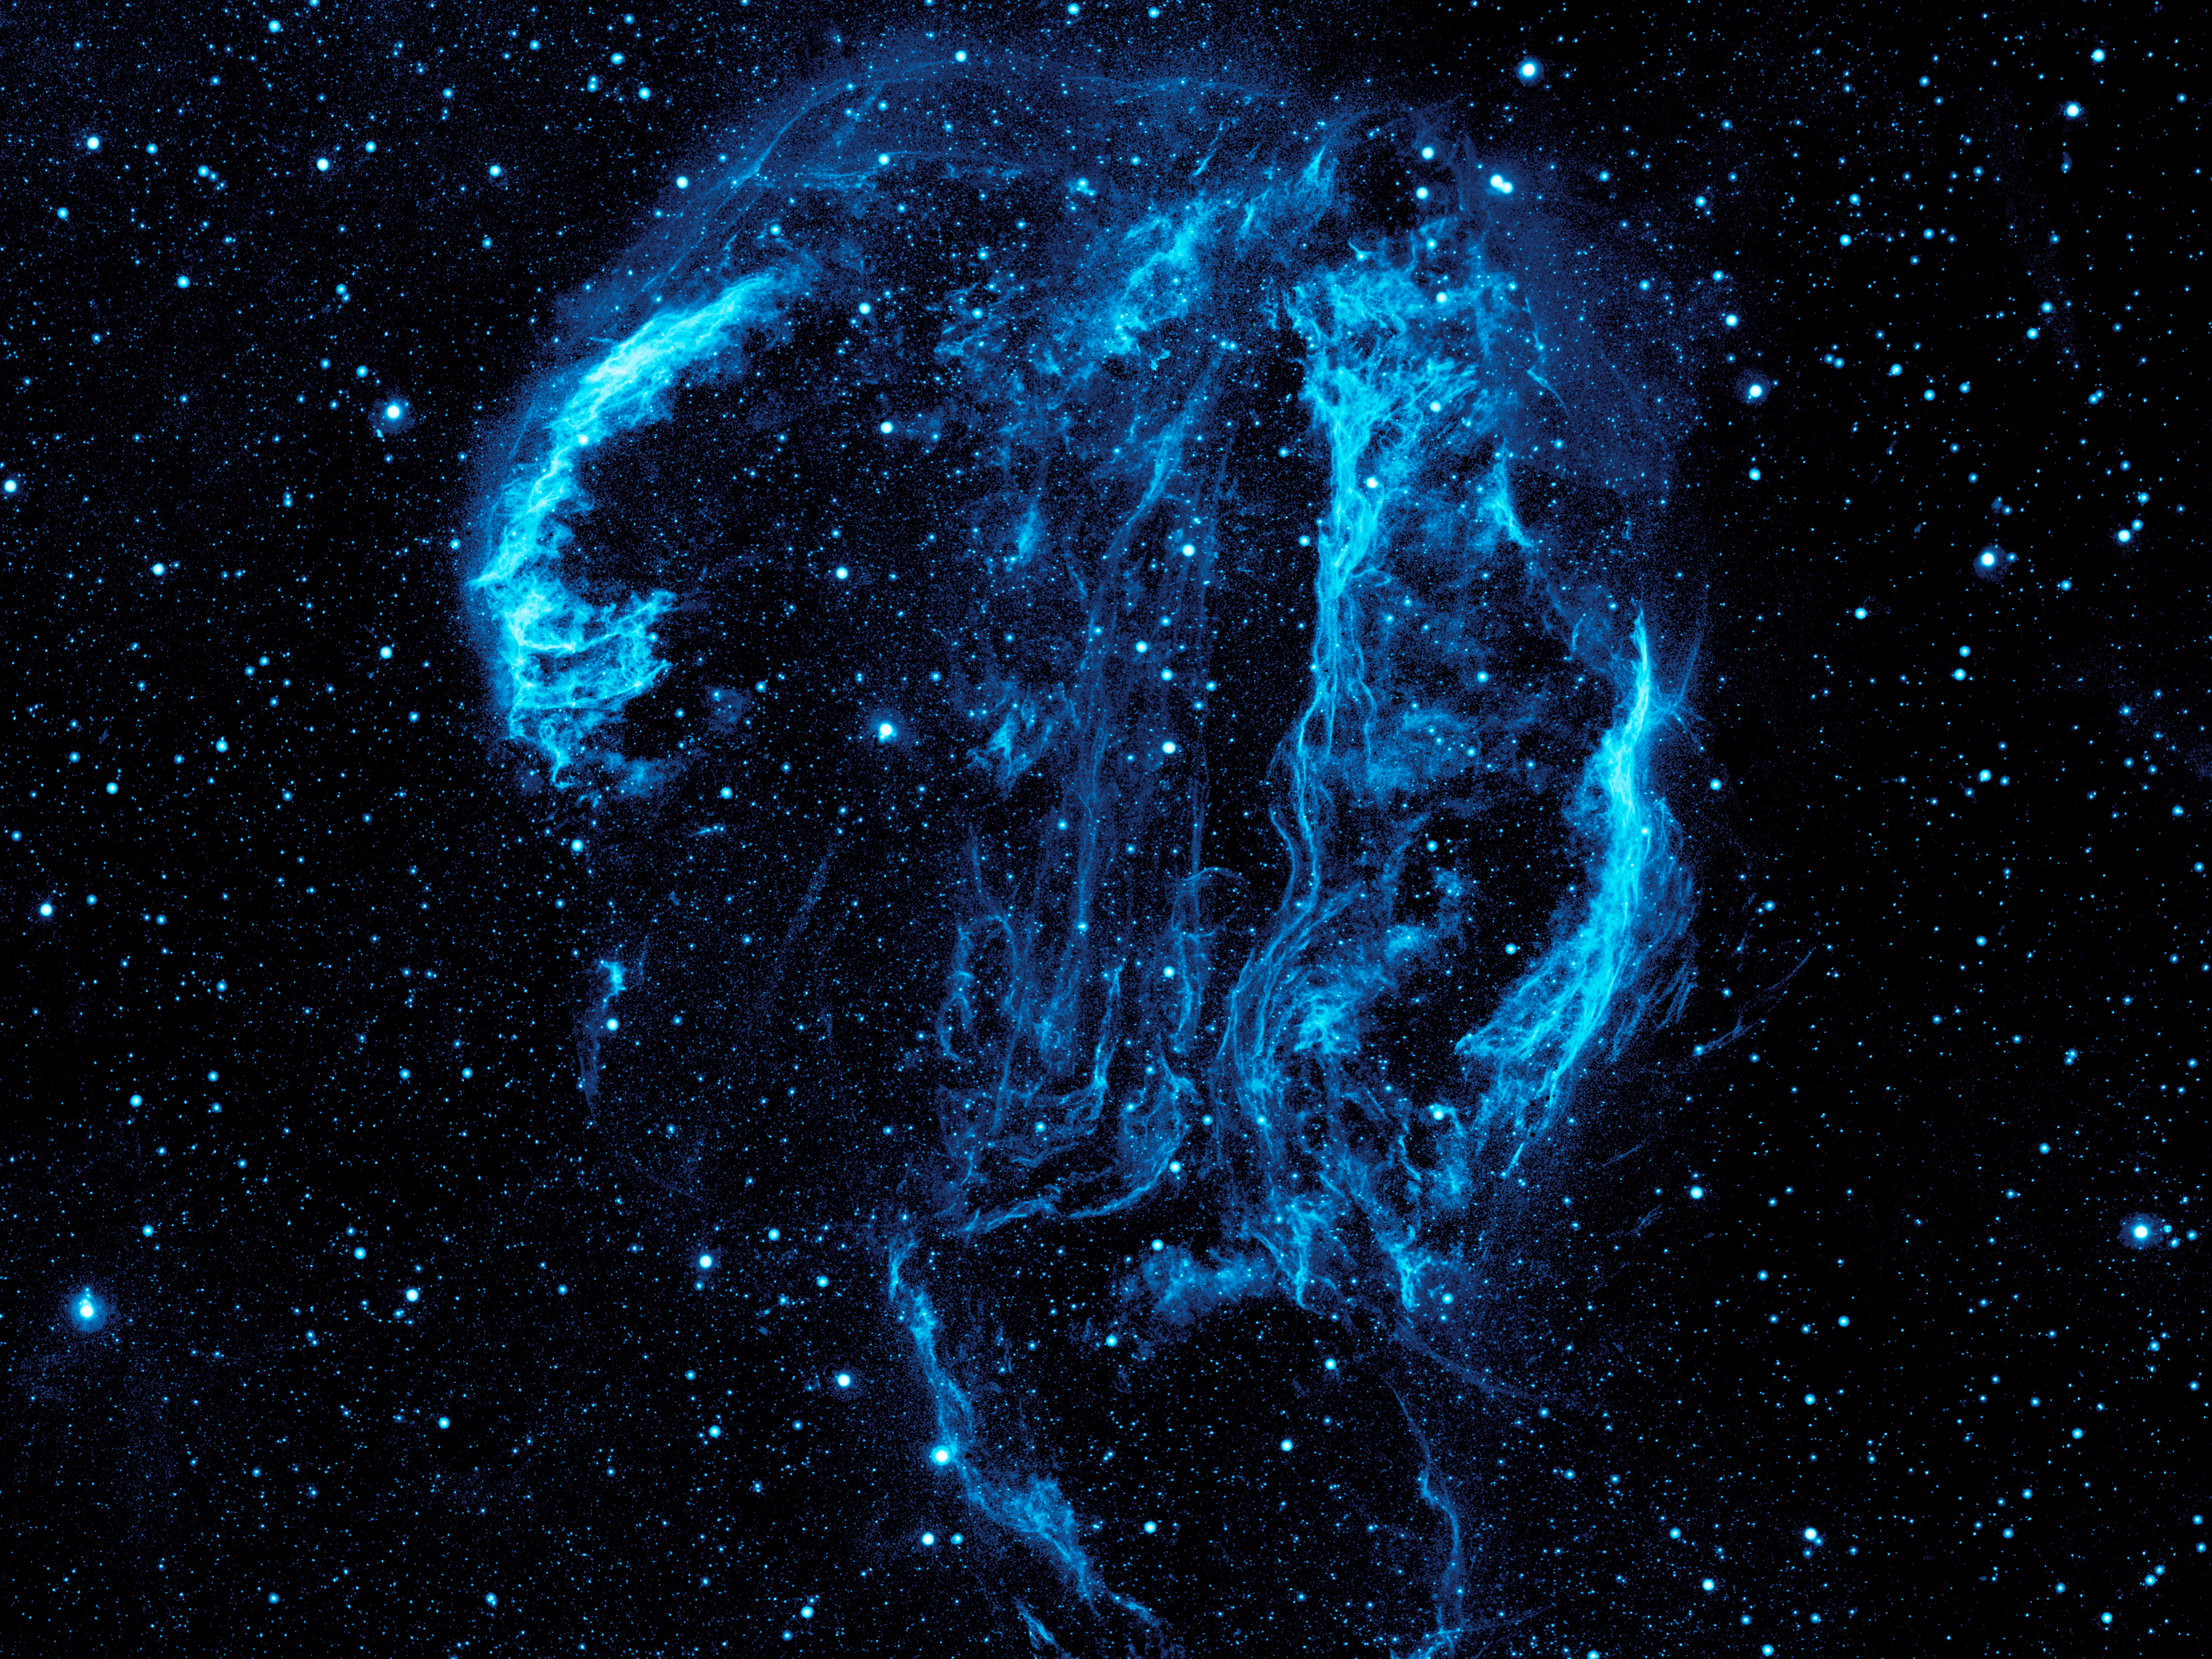  image of the Cygnus Loop nebula Image credit NASAJPL Caltech